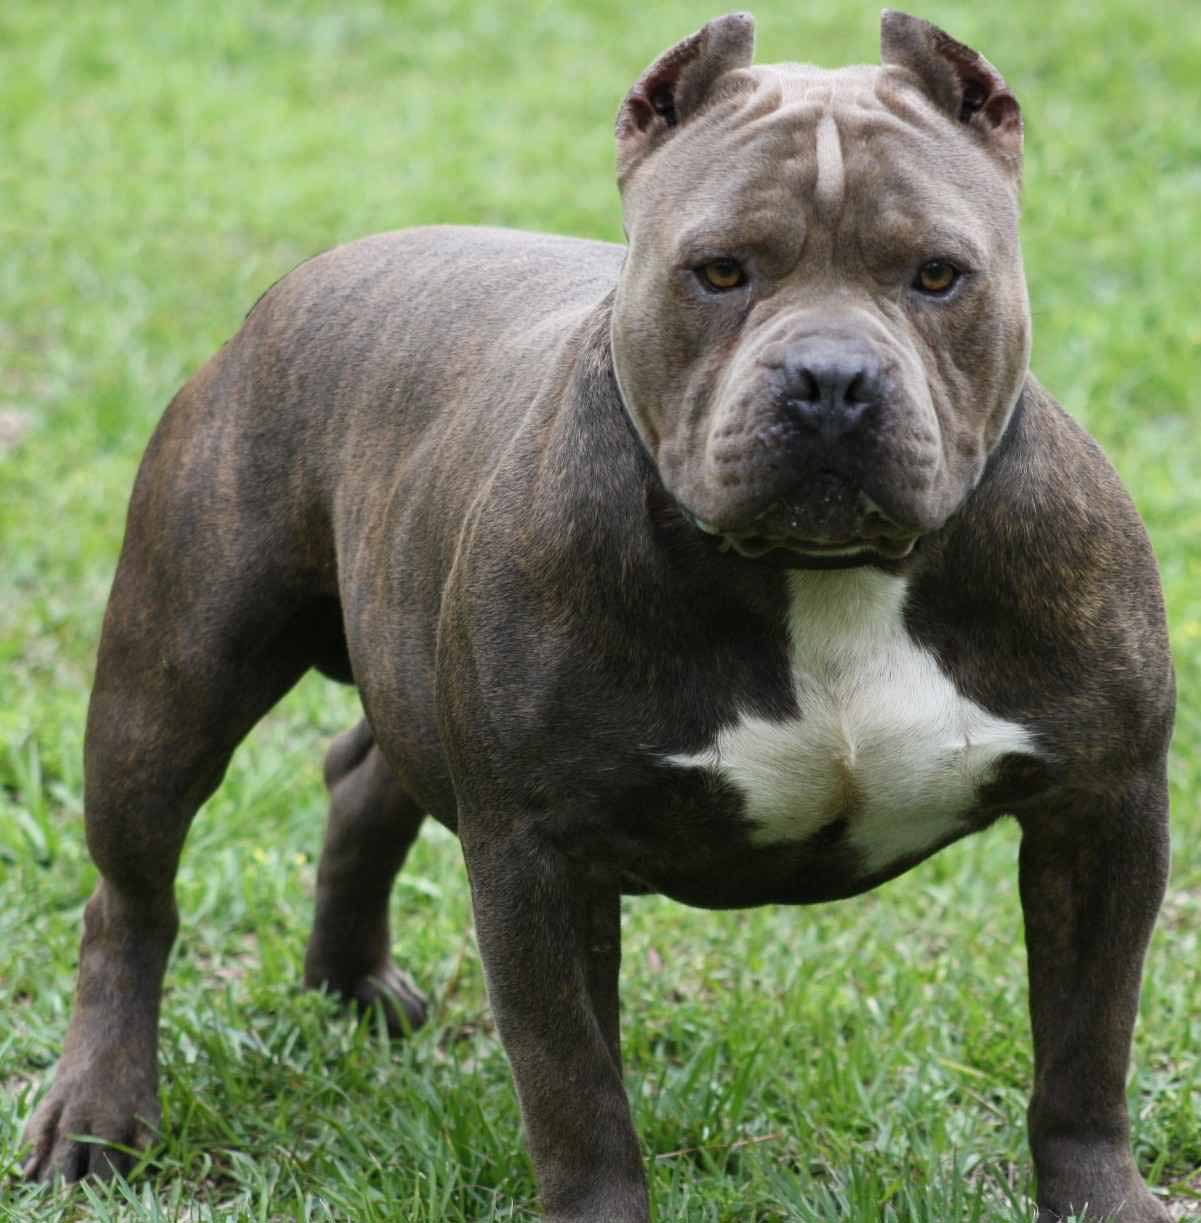 HD Wallpaper Pitbull Dog